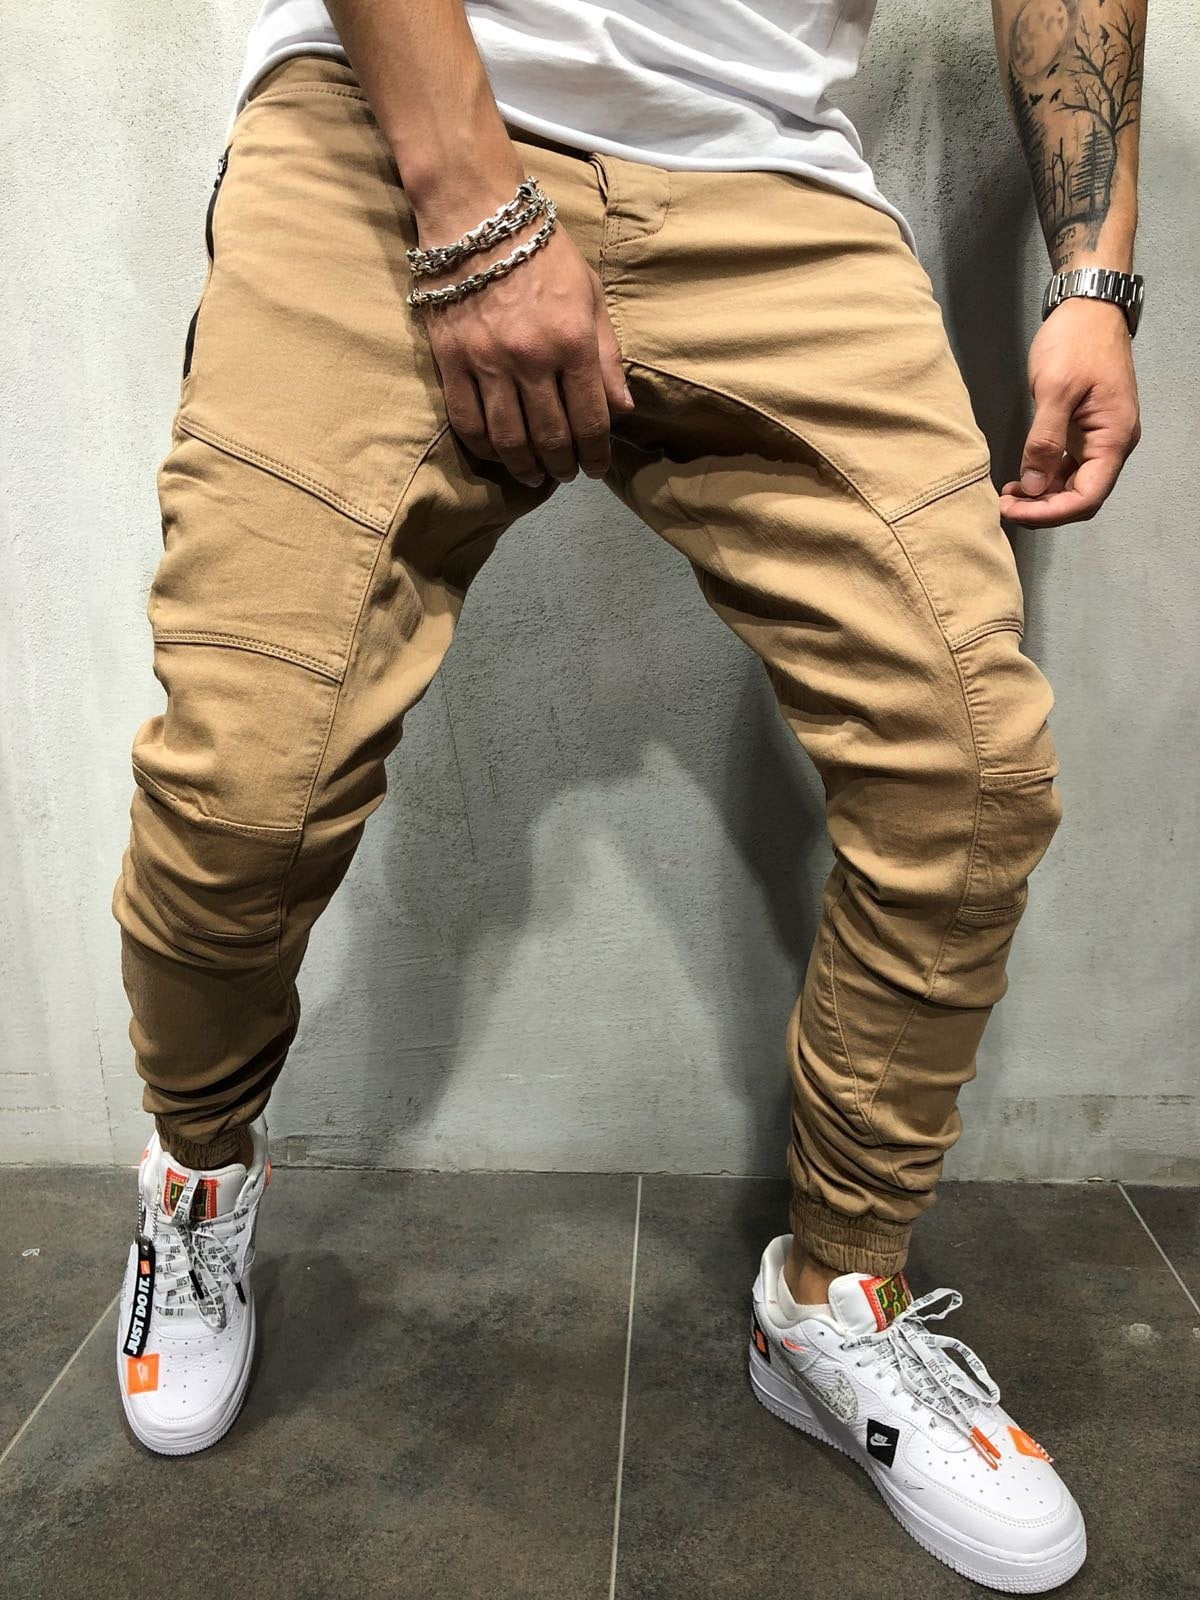 Men's Slim Fit Urban Straight Leg Trousers Casual Pencil Jogger Cargo Pants UK